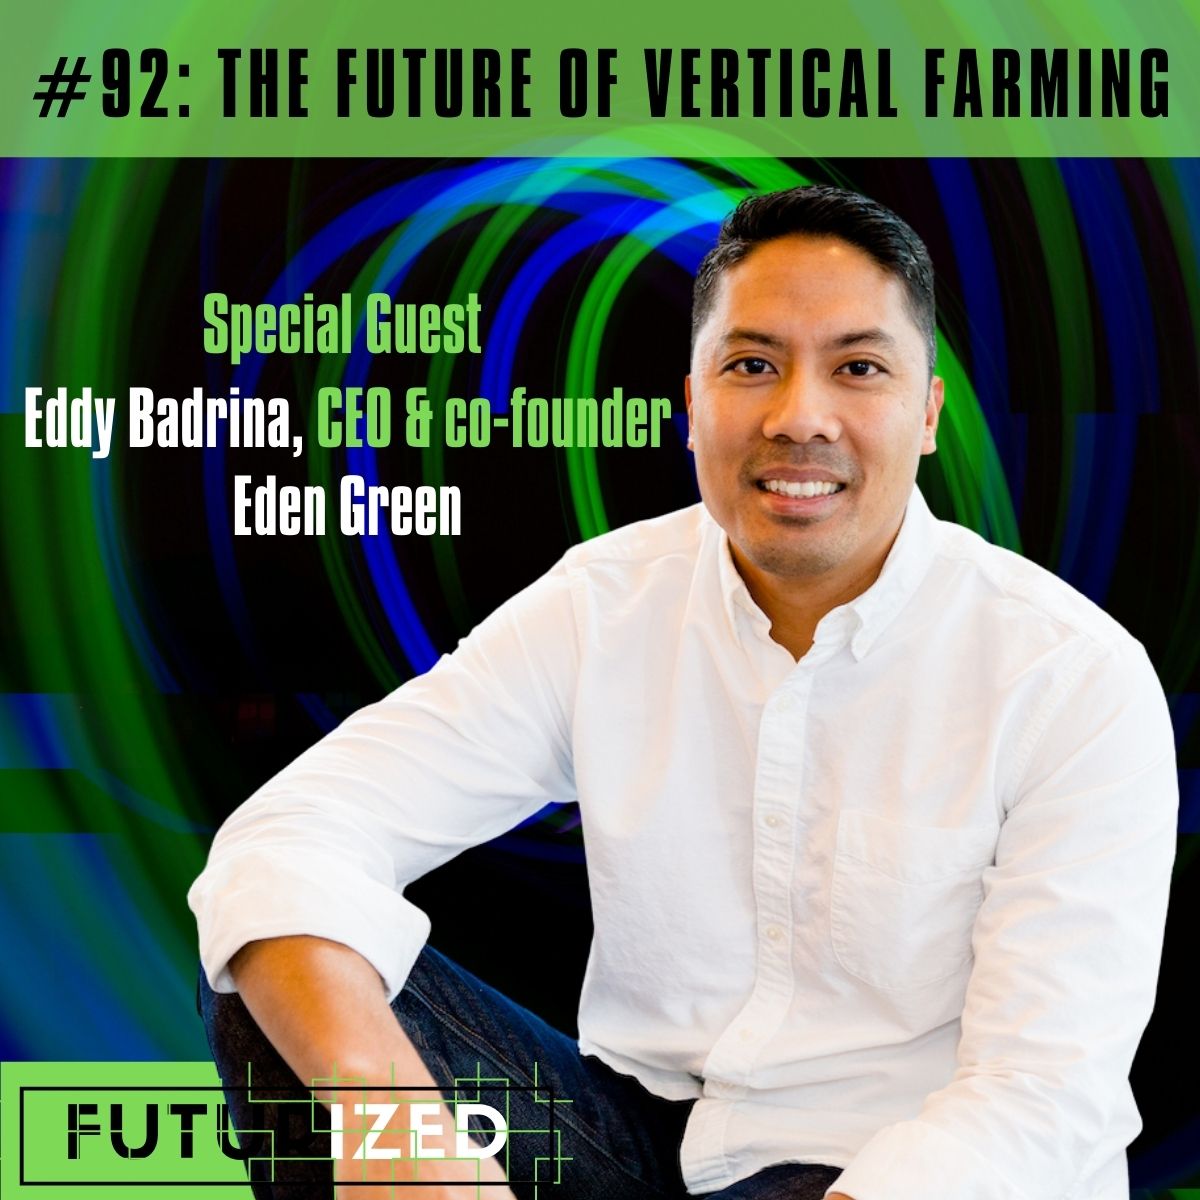 The Future of Vertical Farming